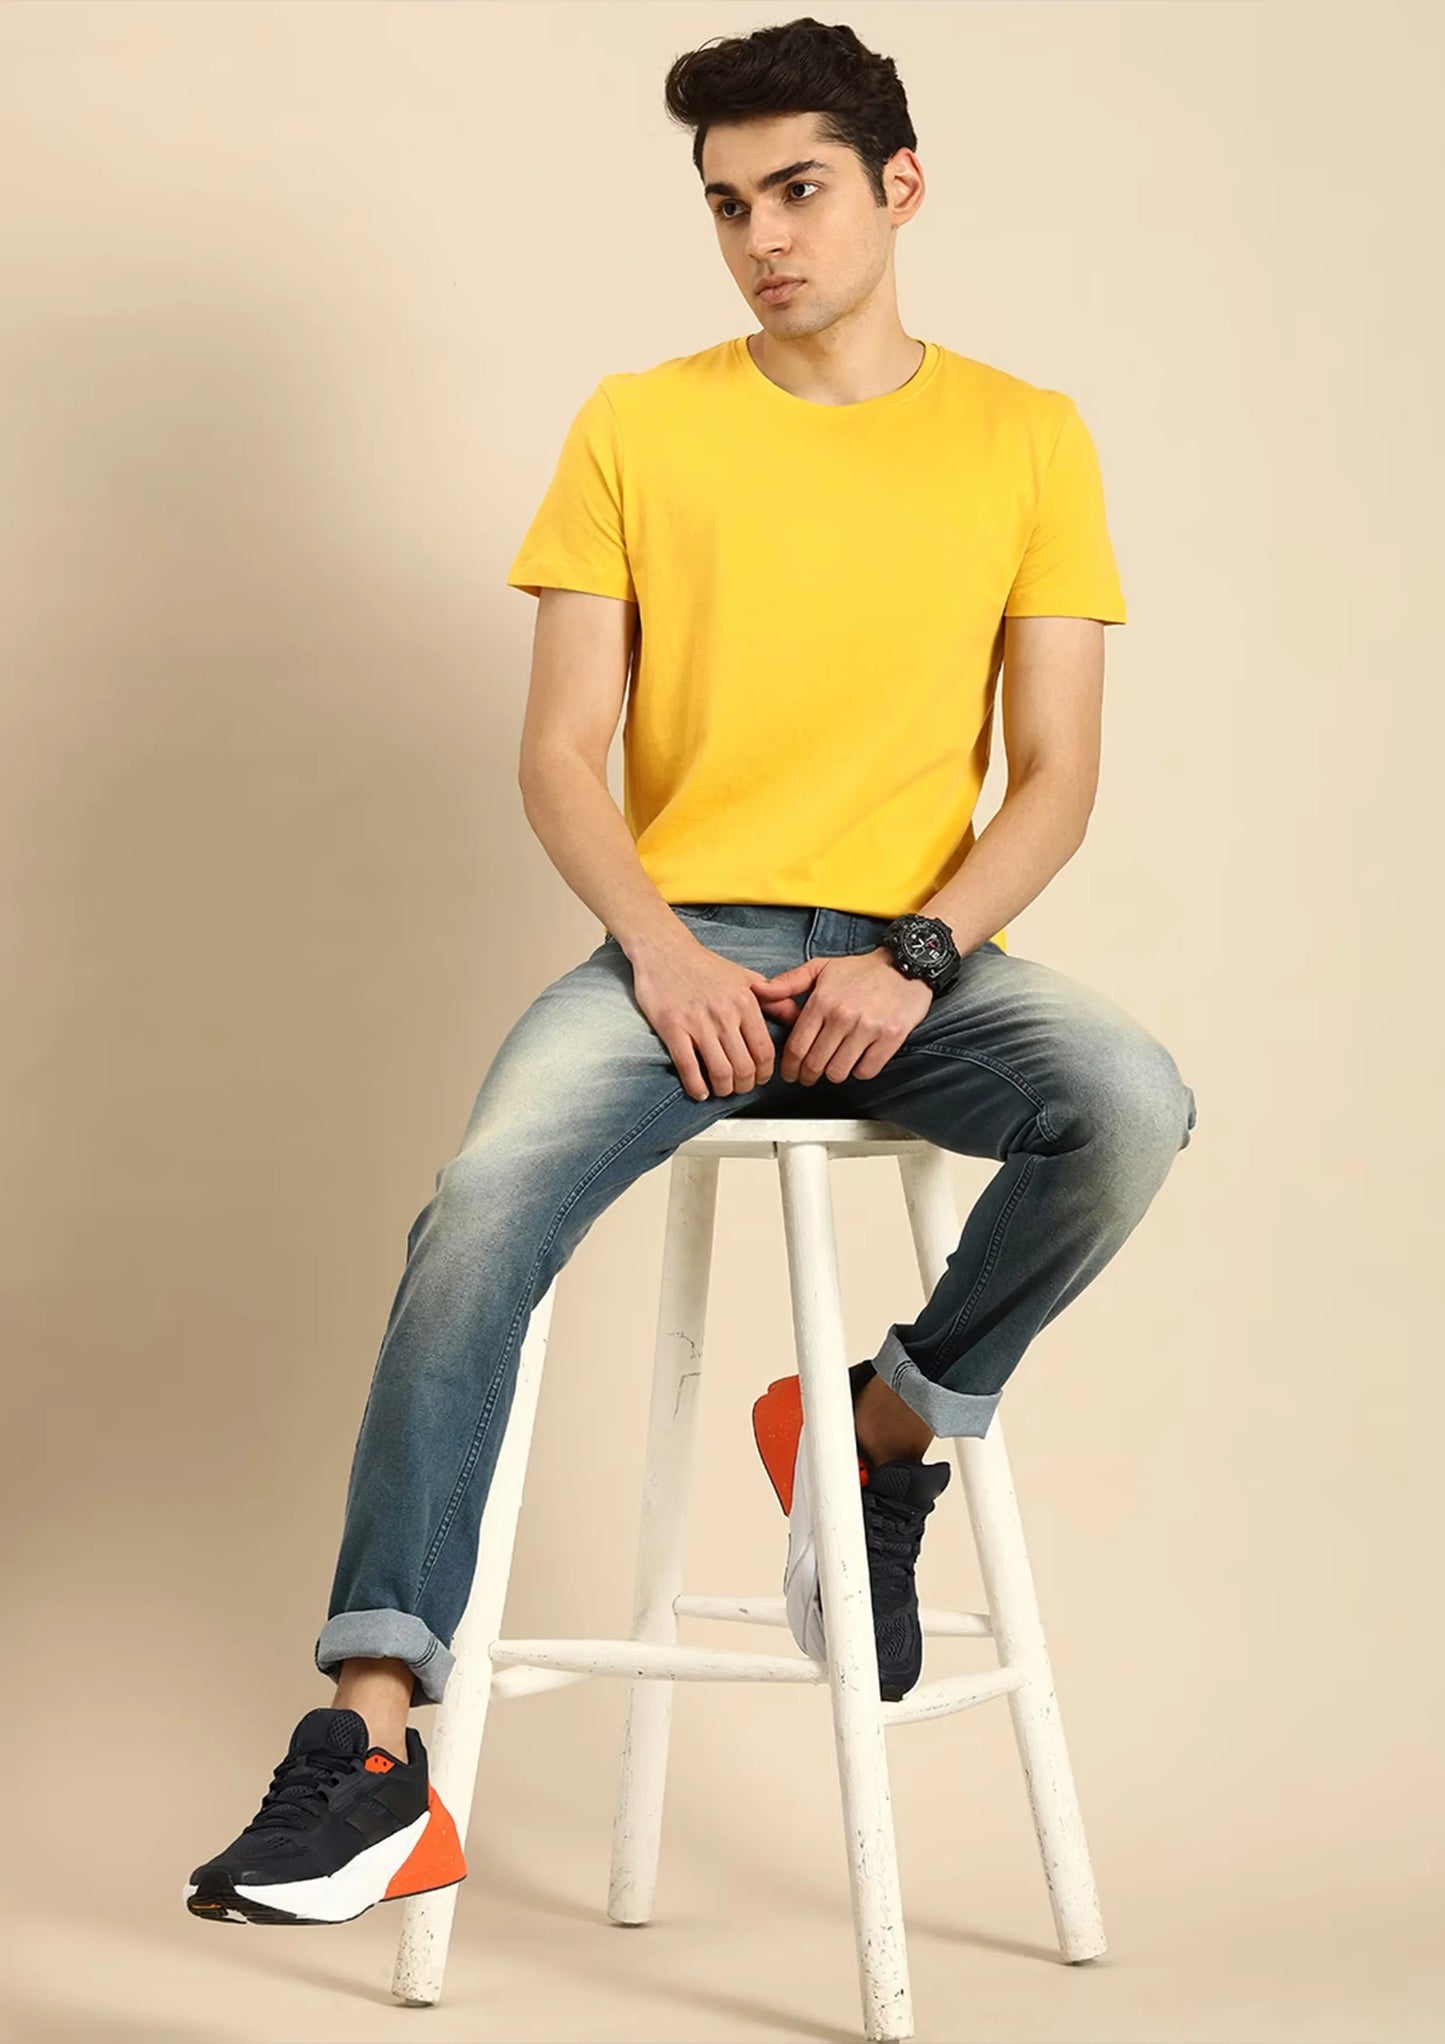 Glorious Golden Cotton T-Shirt Plain Color Half Sleeve Round Neck Men's roscoe